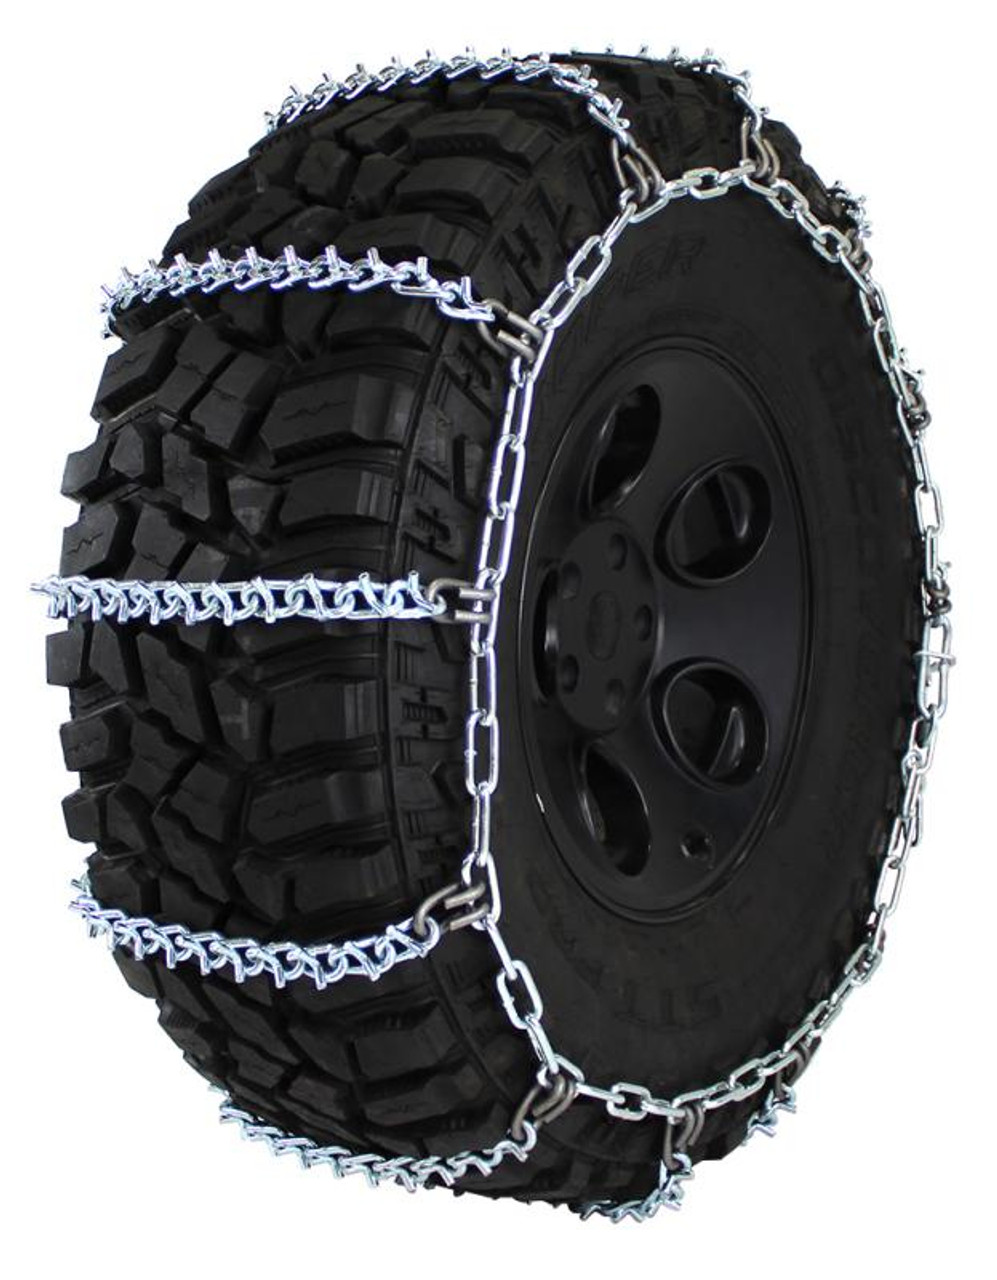 Wide Base (Super Single) V-Bar Ladder Pattern Truck Tire Chains